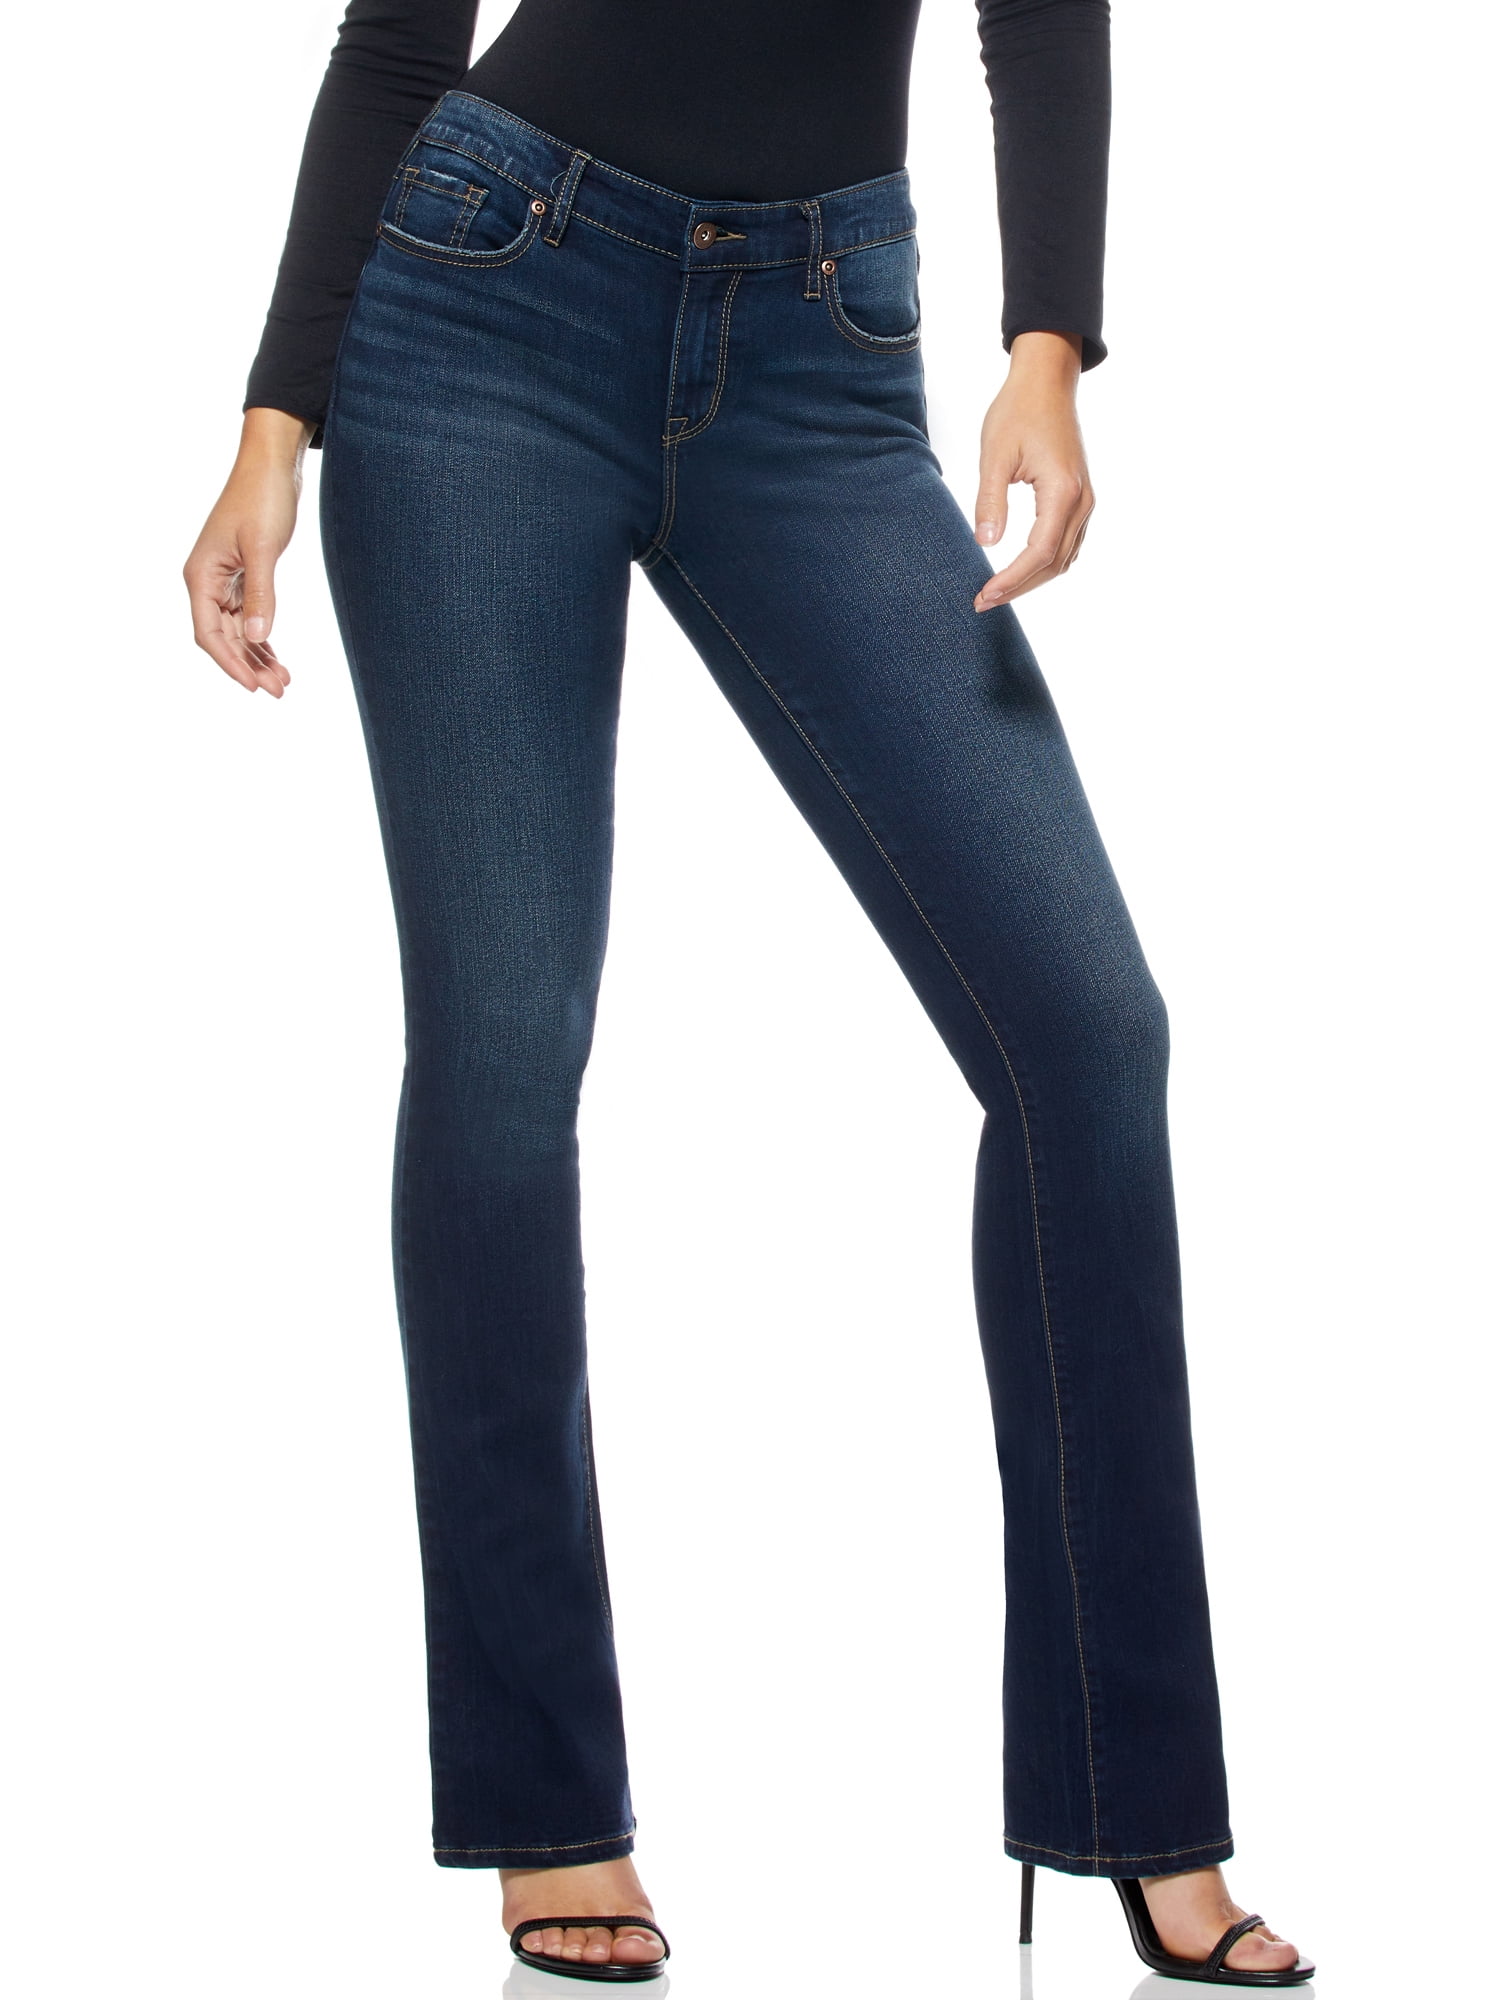 Sofia Vergara Wearing Jeans August 2016